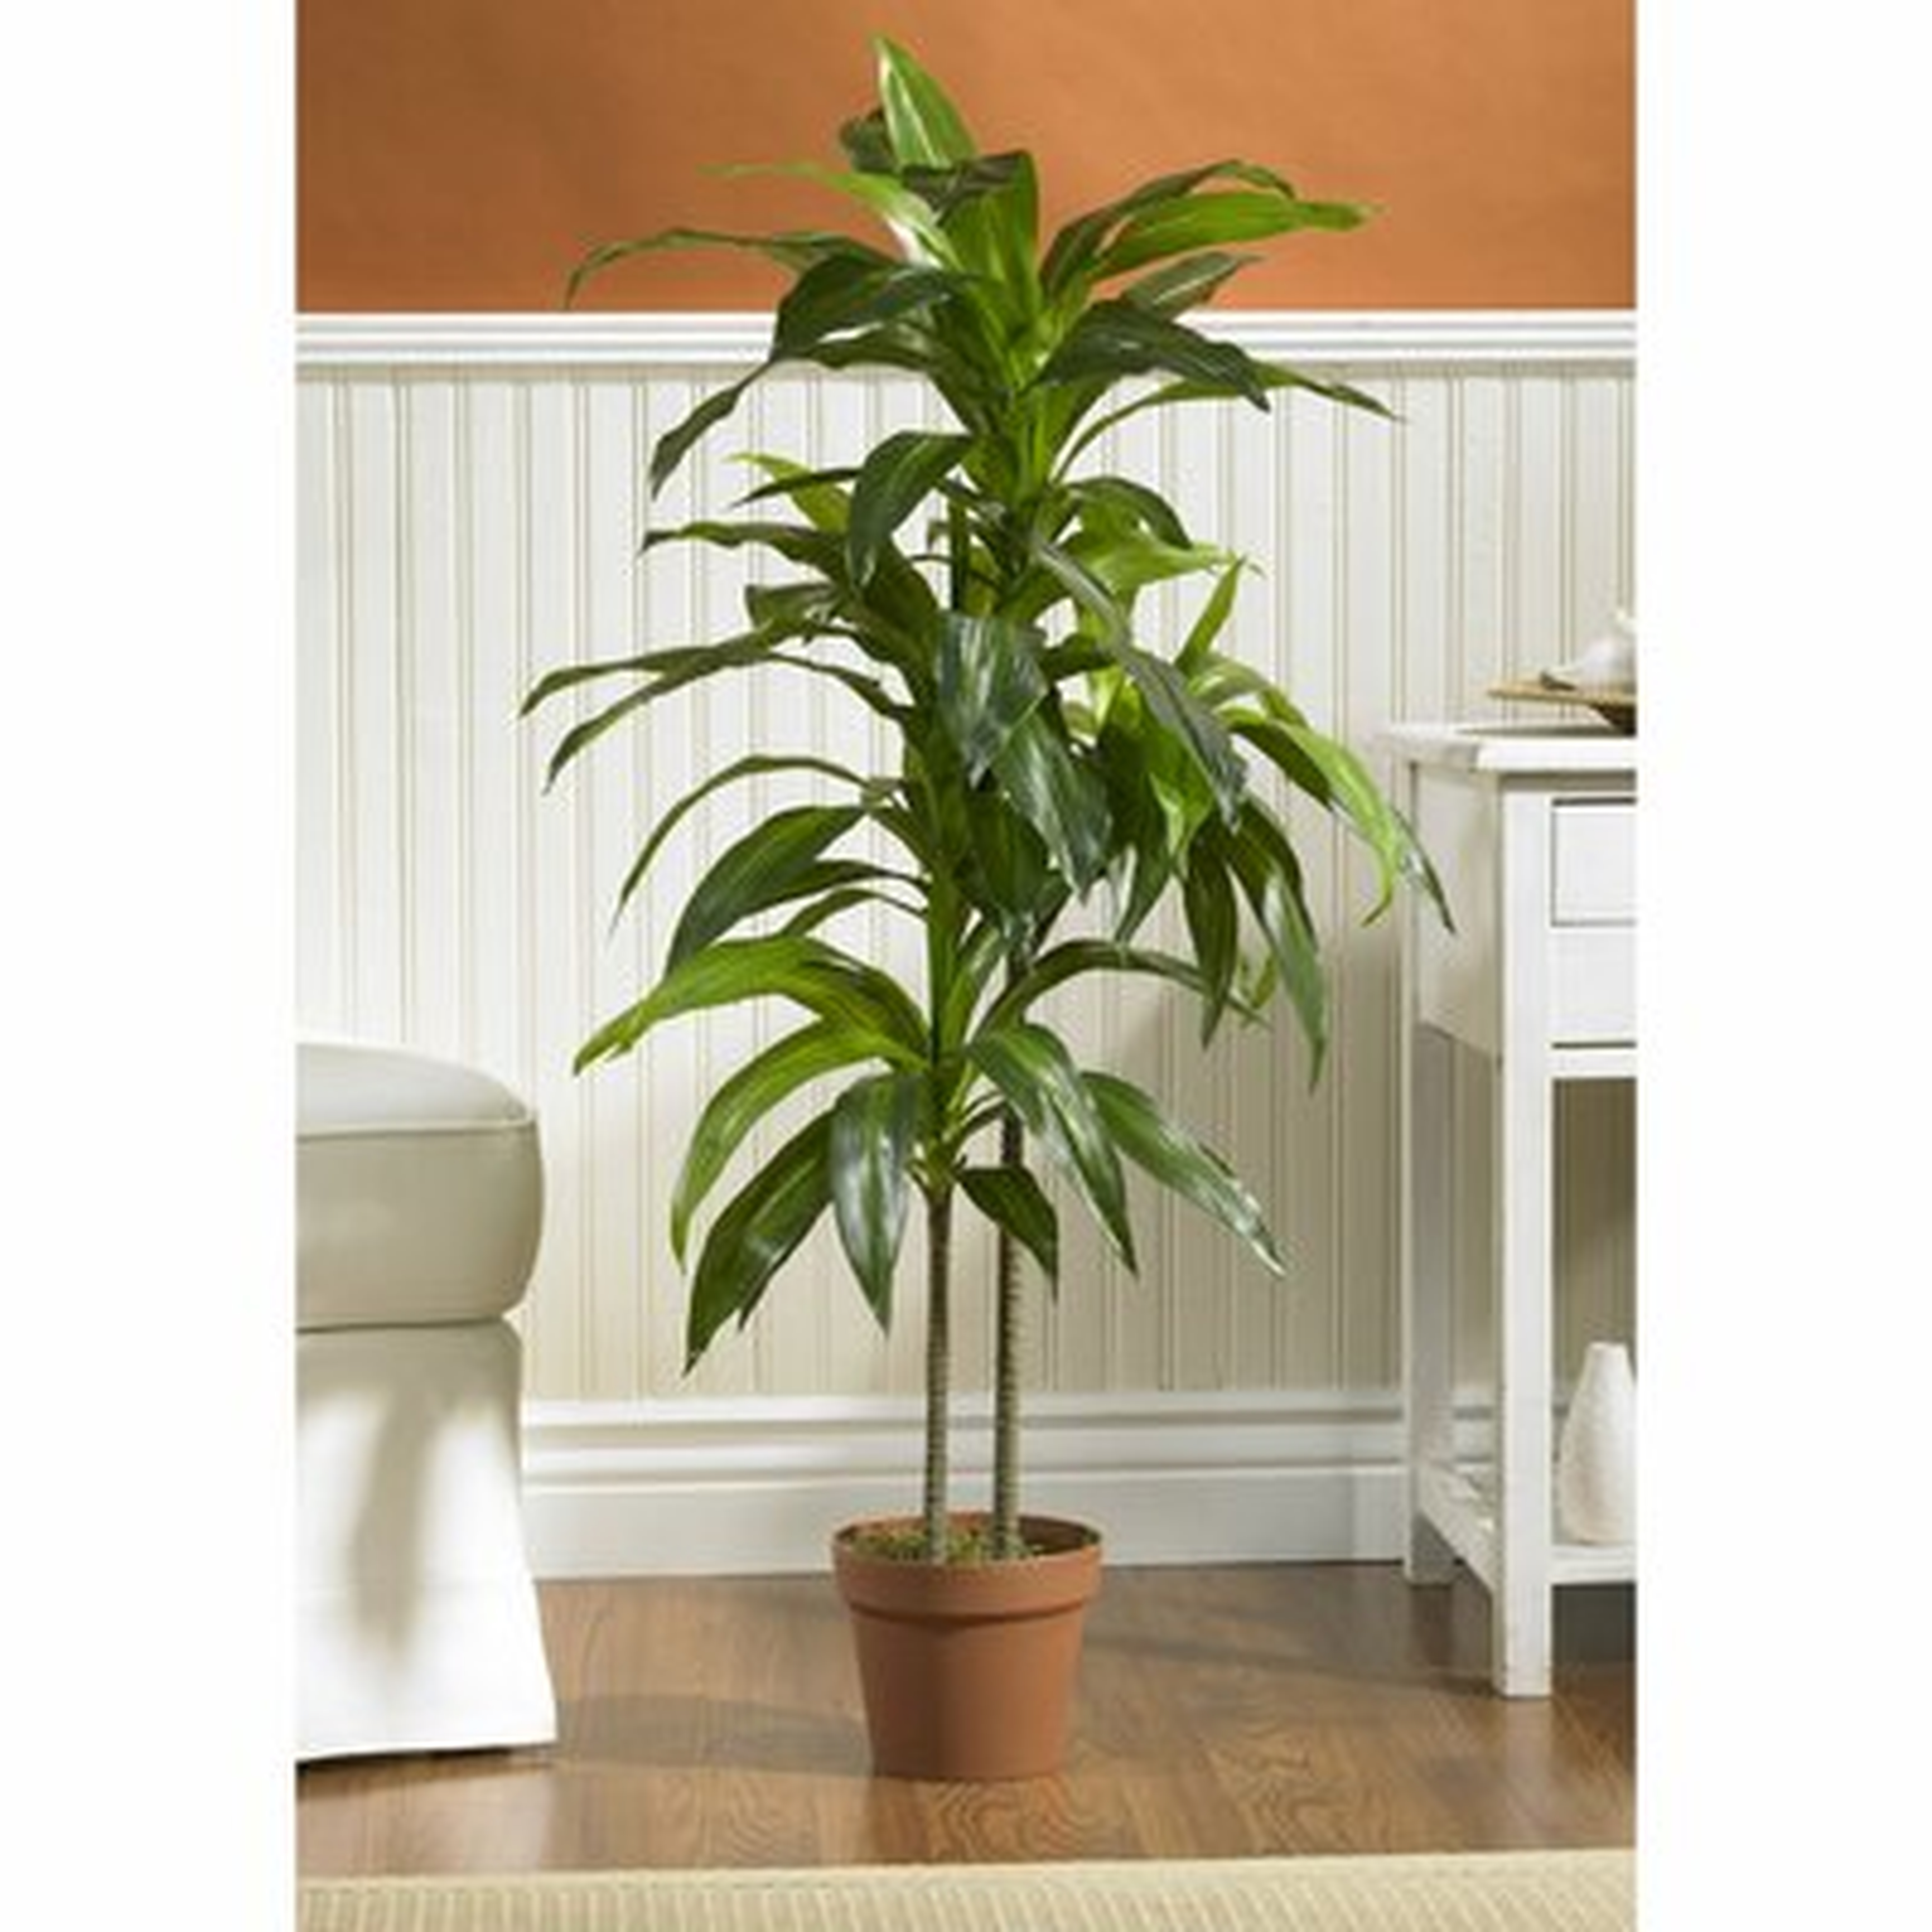 42" Dracaena Plant in Planter - Wayfair